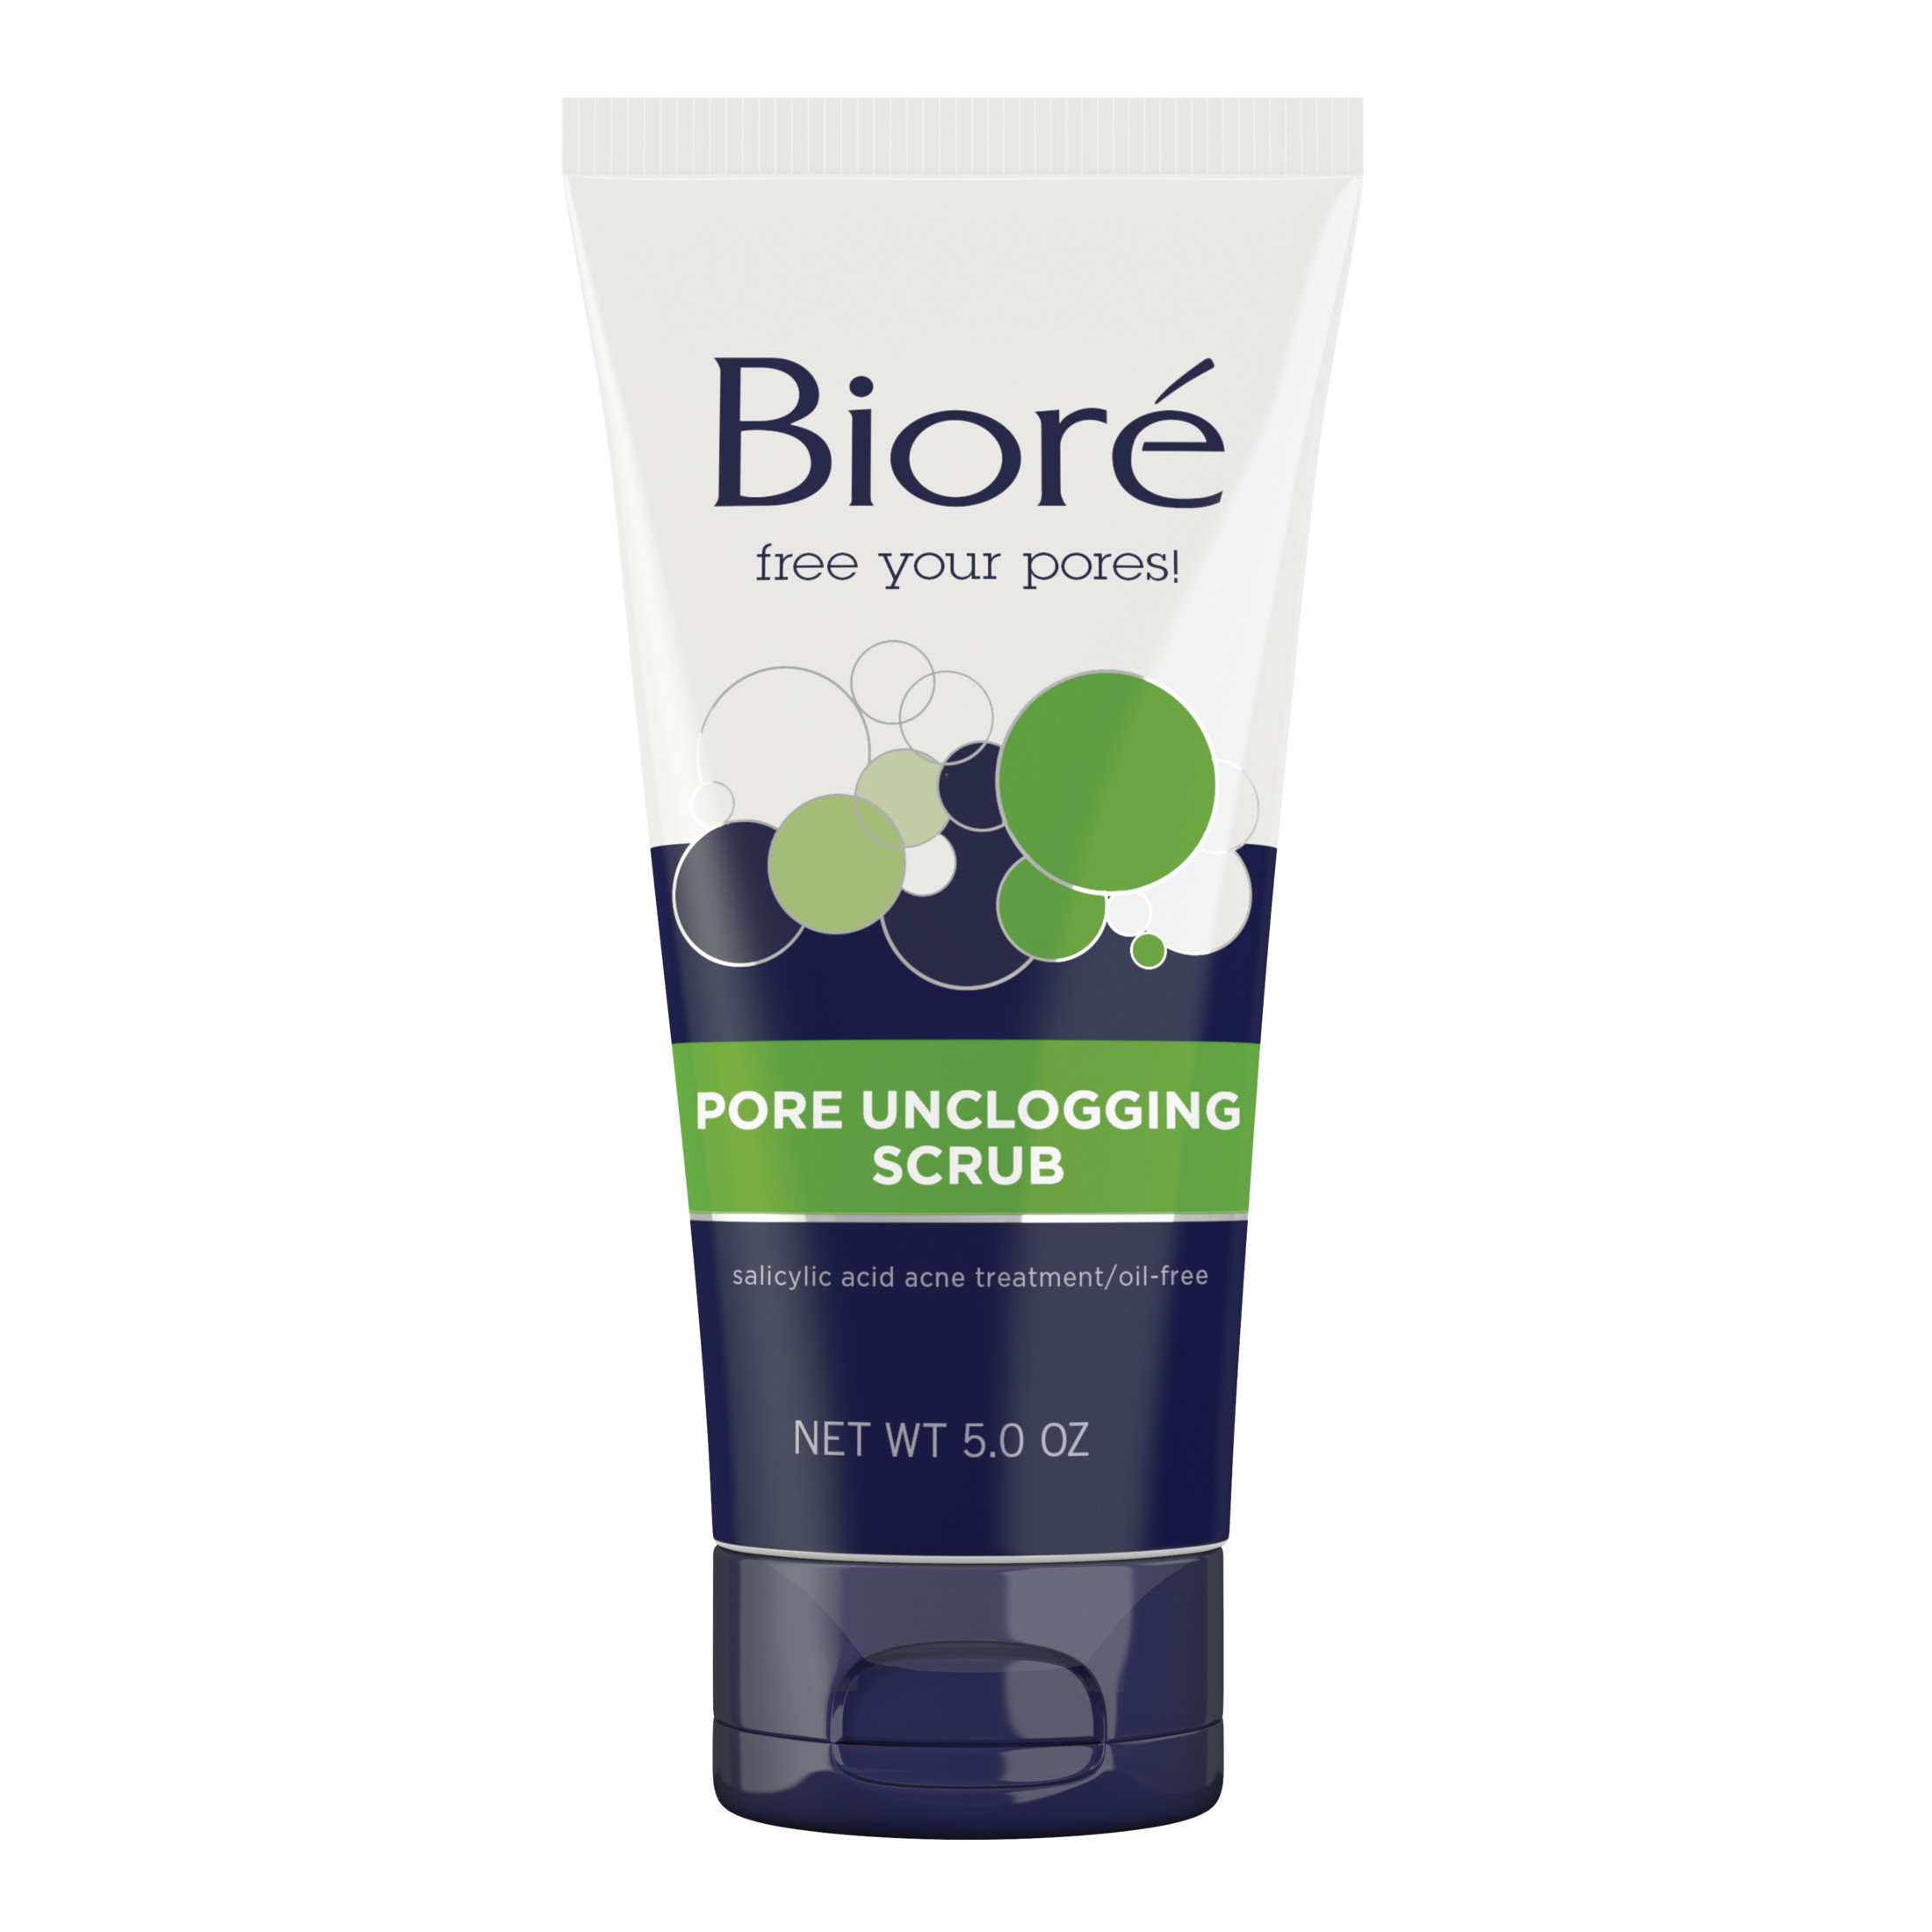 Biore 2% Salicylic Acid, Oil-Free Acne Face Scrub, 5 fl oz (HSA/FSA Approved) - image 1 of 8